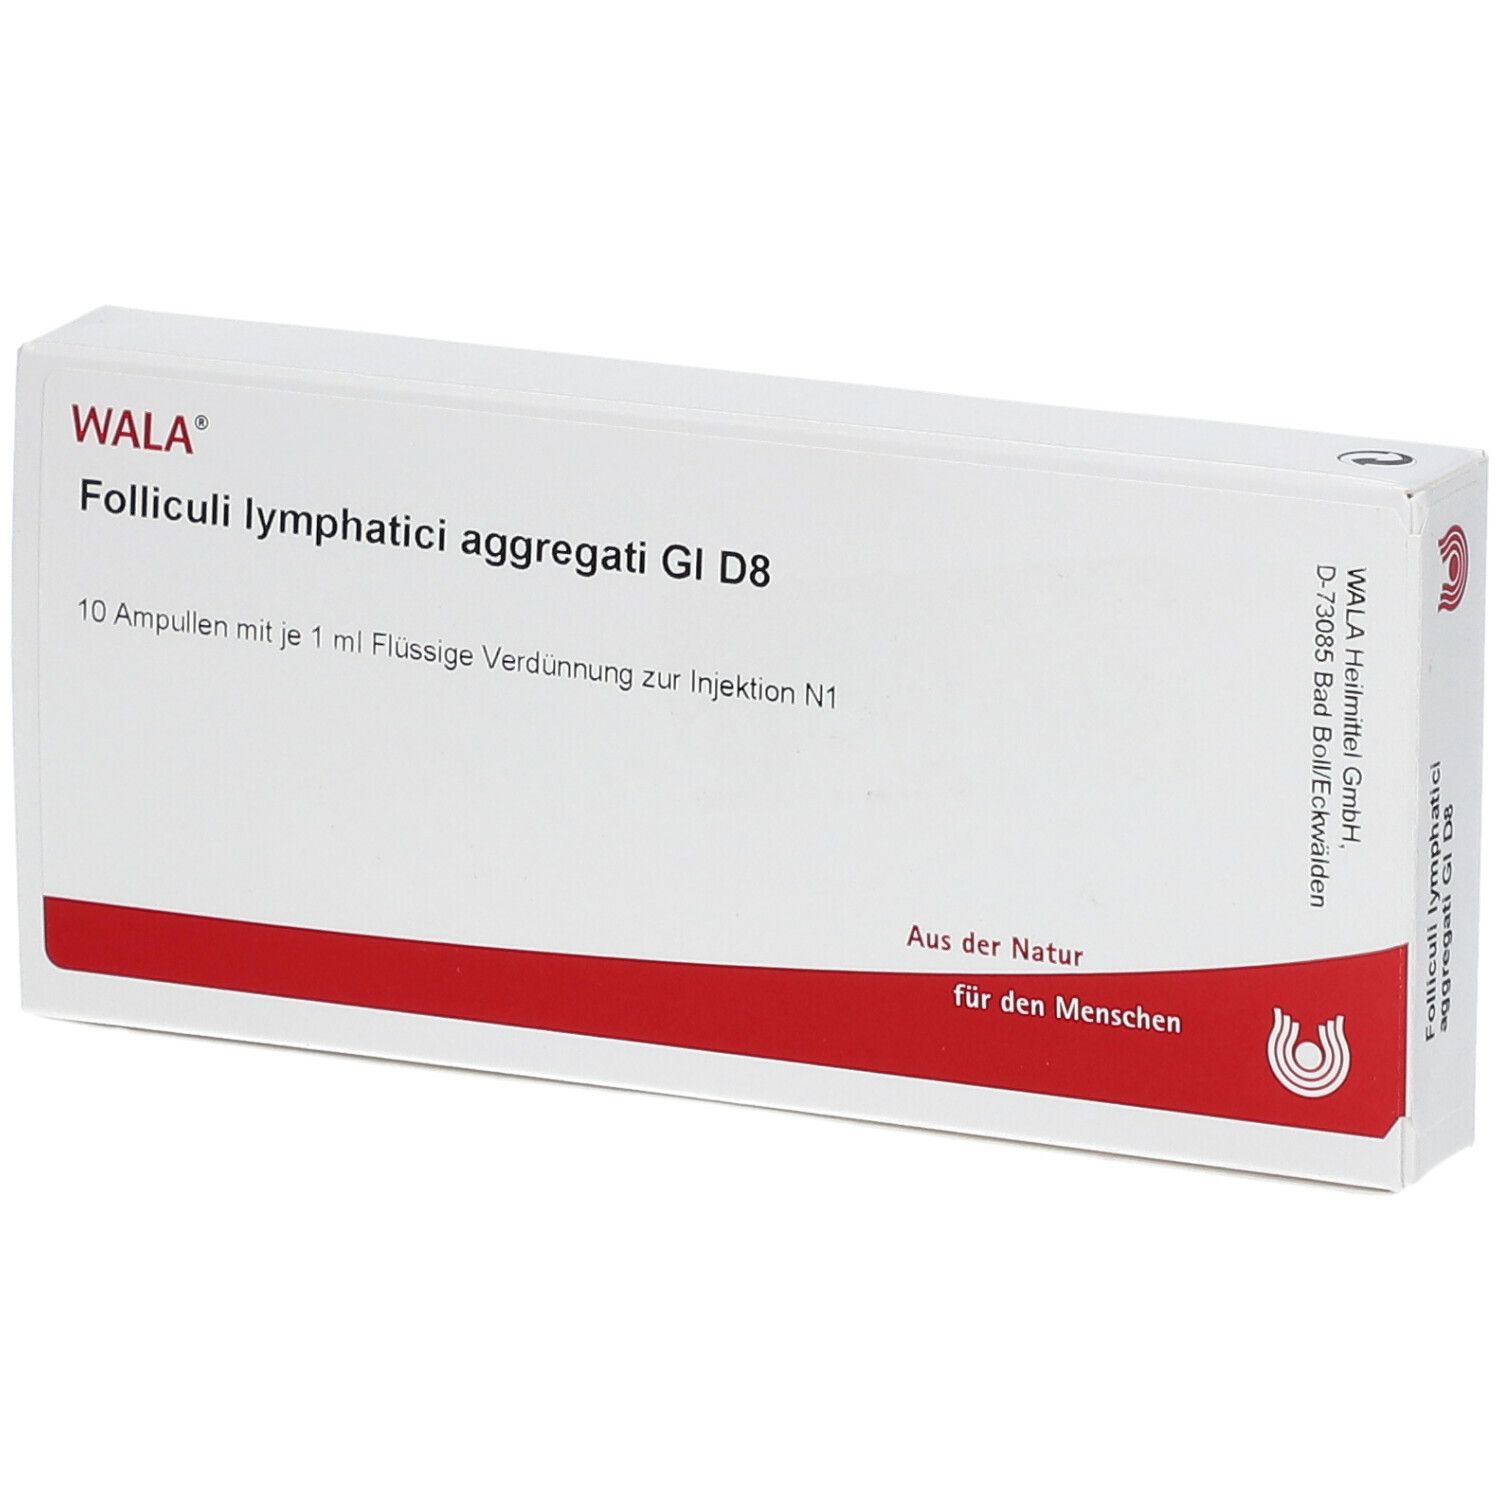 WALA® Folliculi lymphatici aggregati Gl D 8